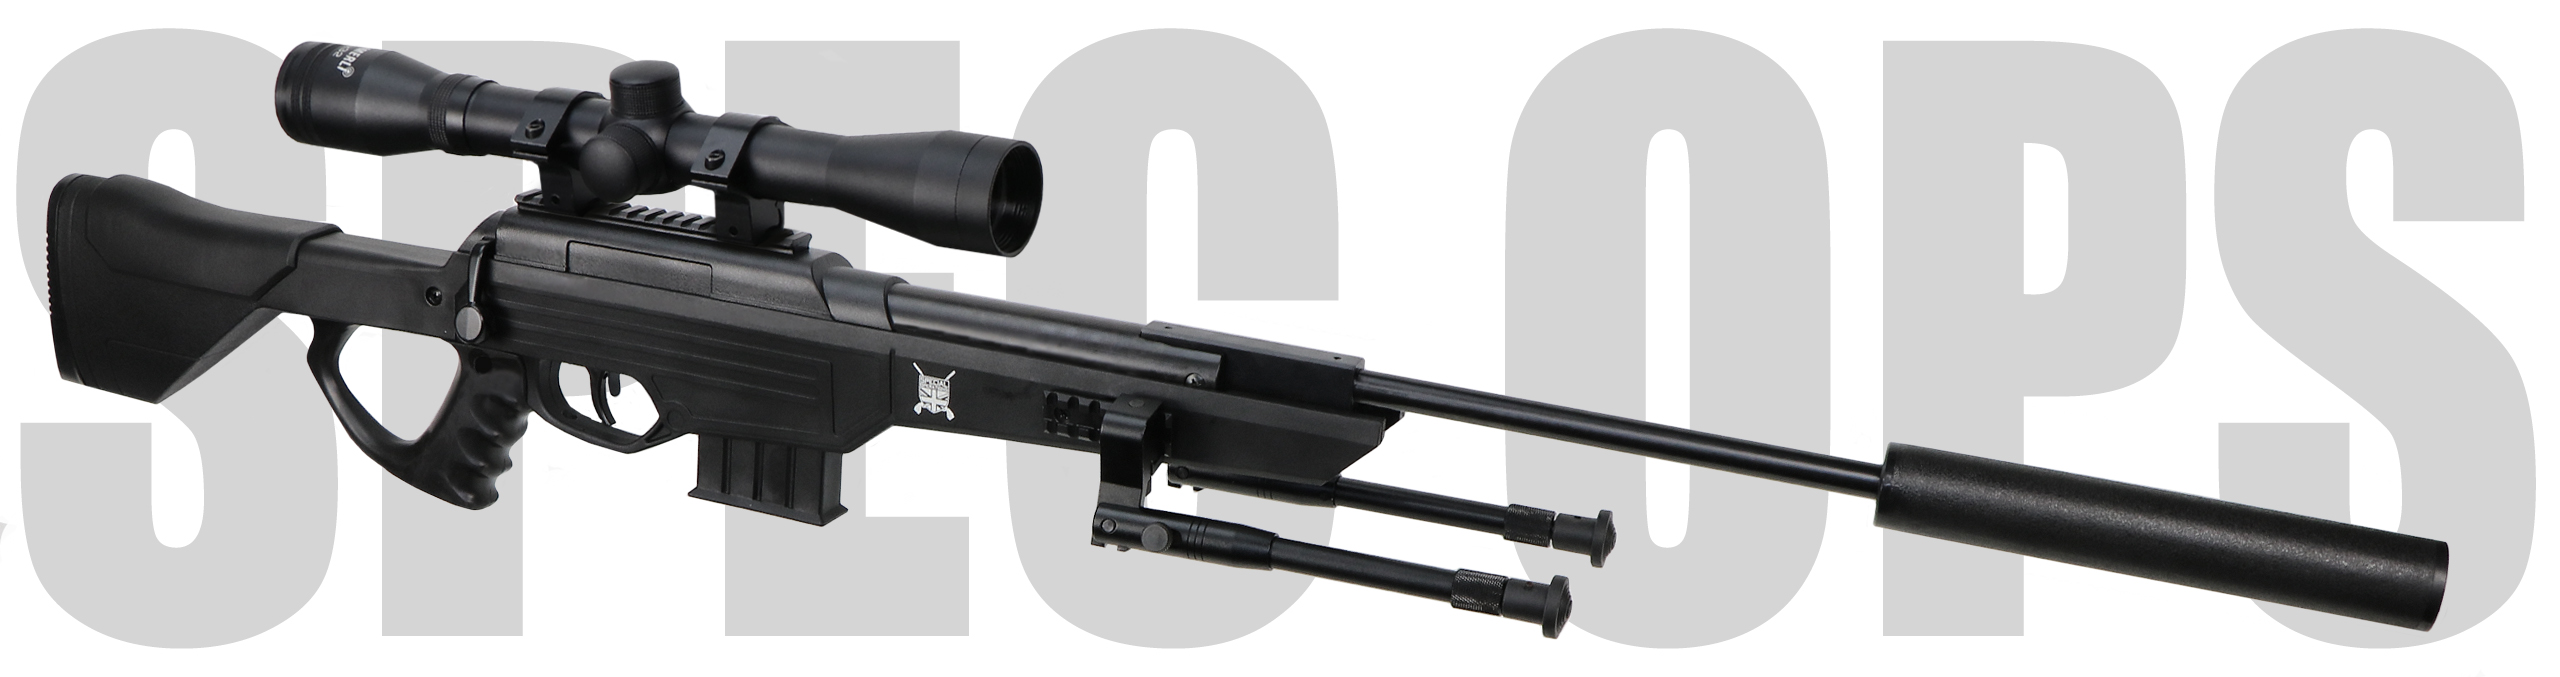 Spec Ops Sniper MKII Air Rifle Set 22